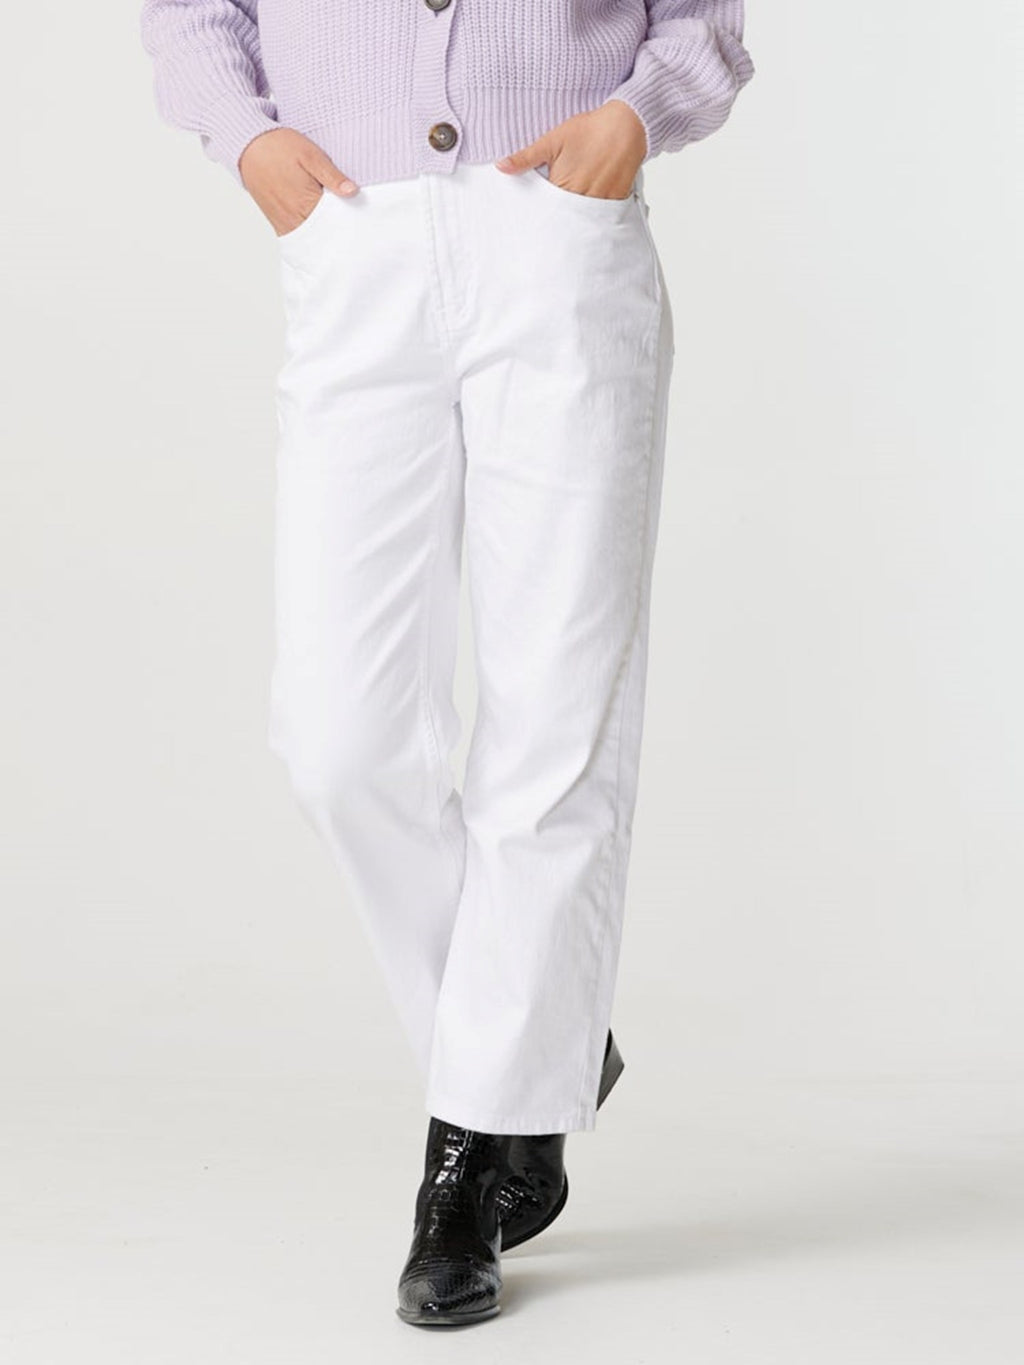 Wide high-waist jeans - White